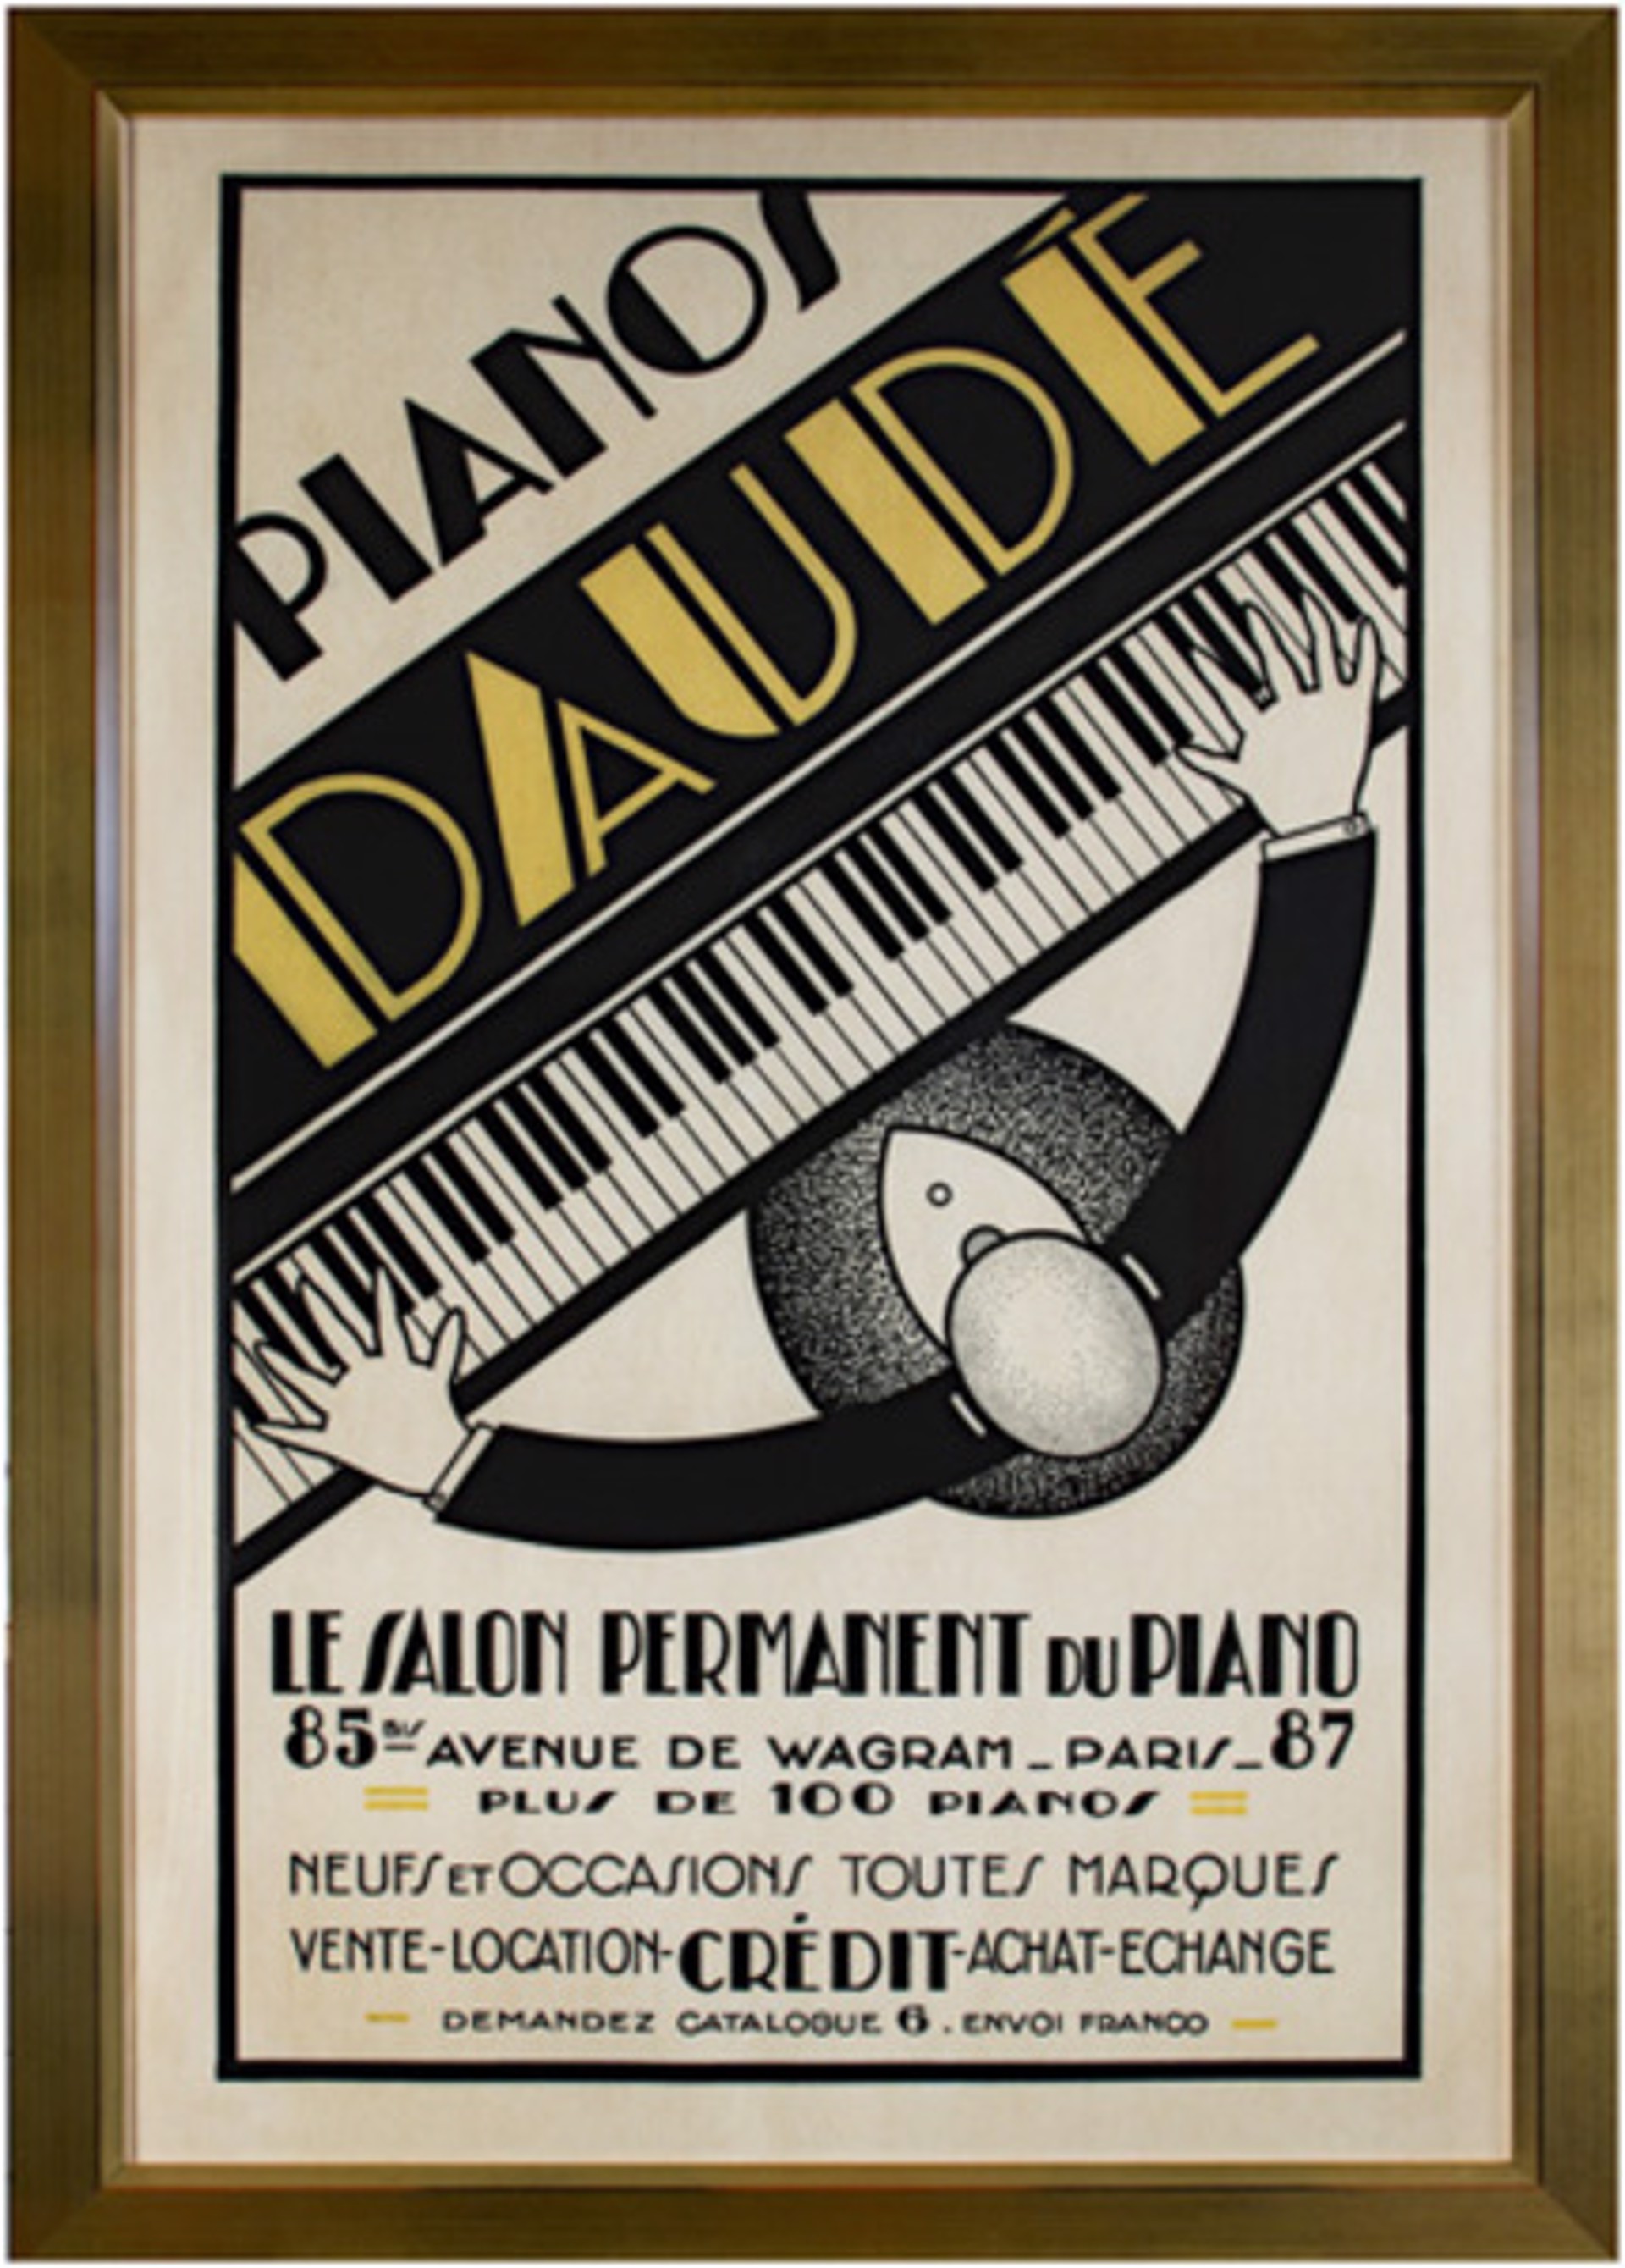 Pianos Daude by Andre Daude